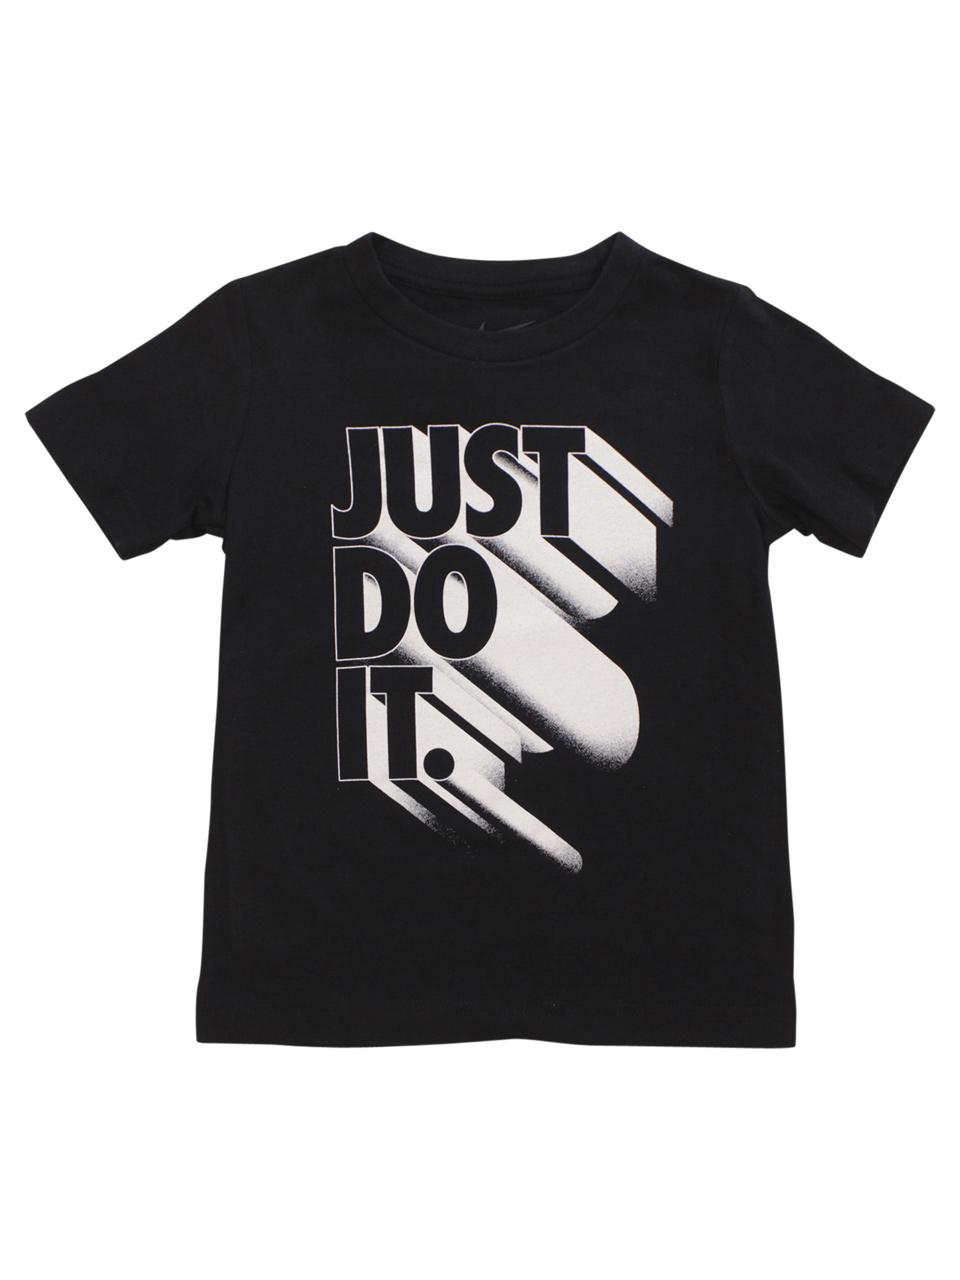 Nike Little Boy S Just Do It Again Short Sleeve Crew Neck Cotton T Shirt